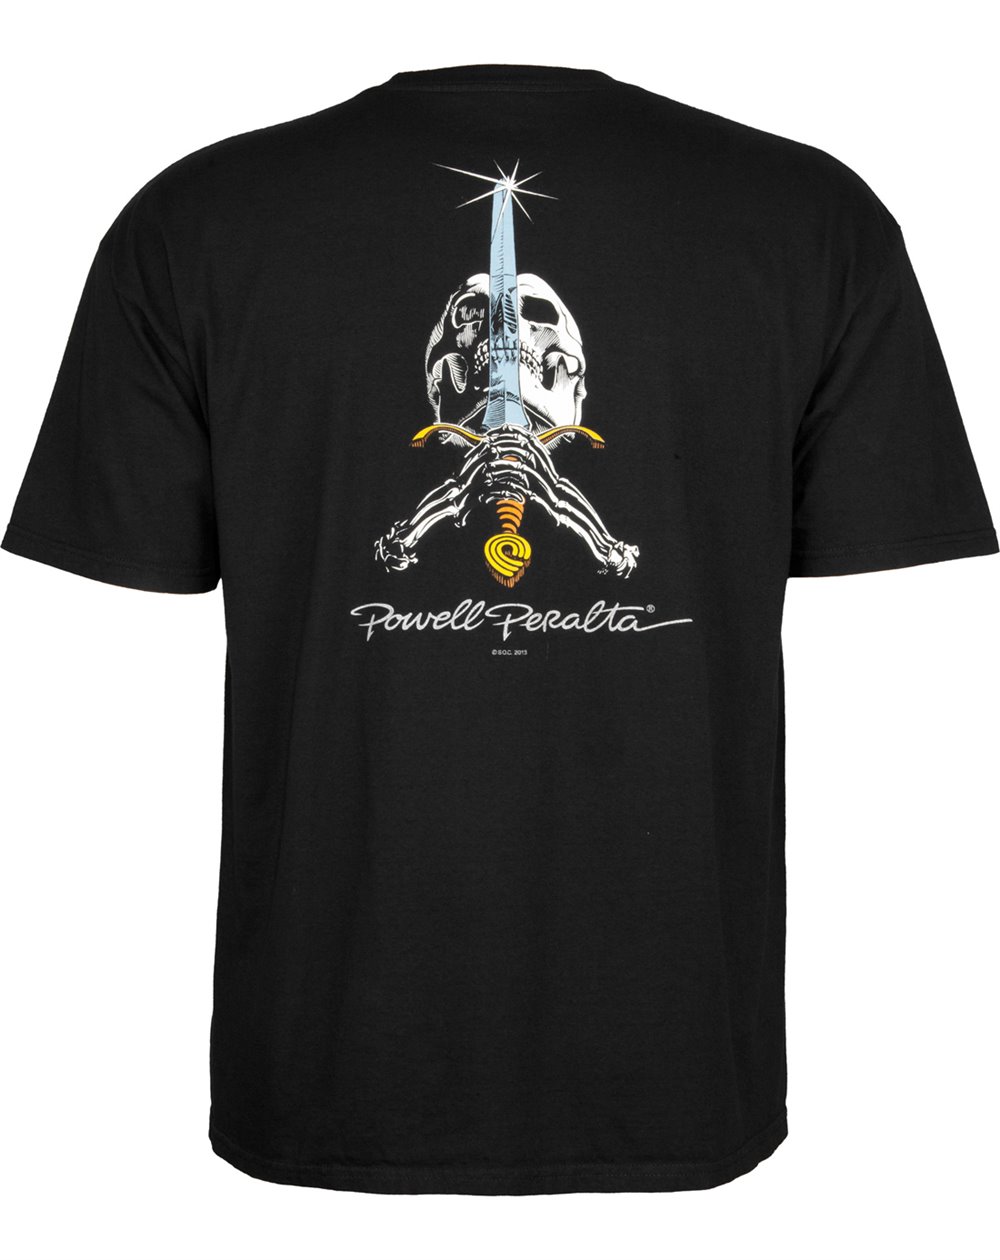 Powell Peralta Skull and Sword T-Shirt Homme Black